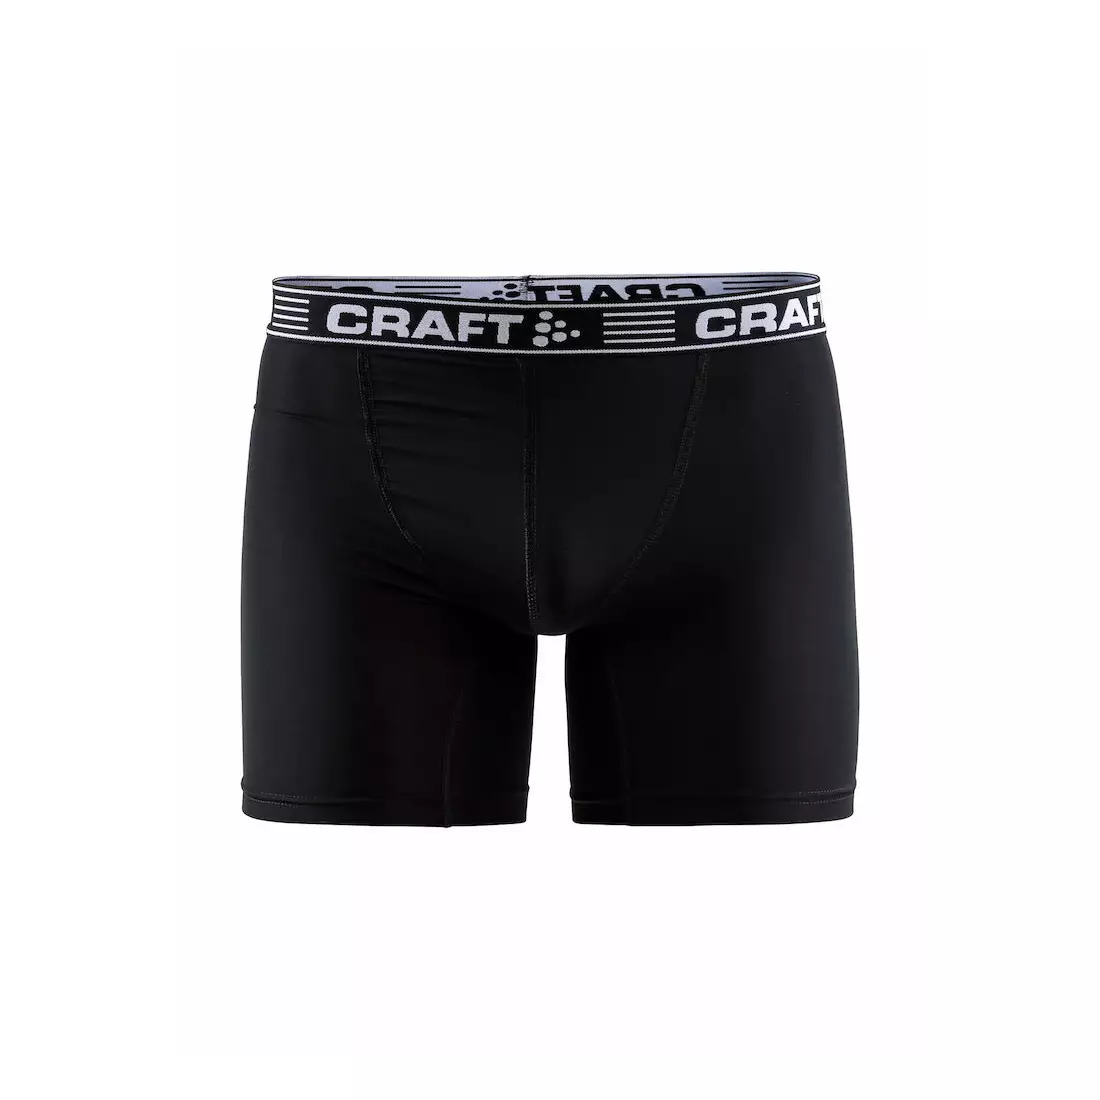 CRAFT 6-INCH men's sports boxer shorts, black 1905489-9900